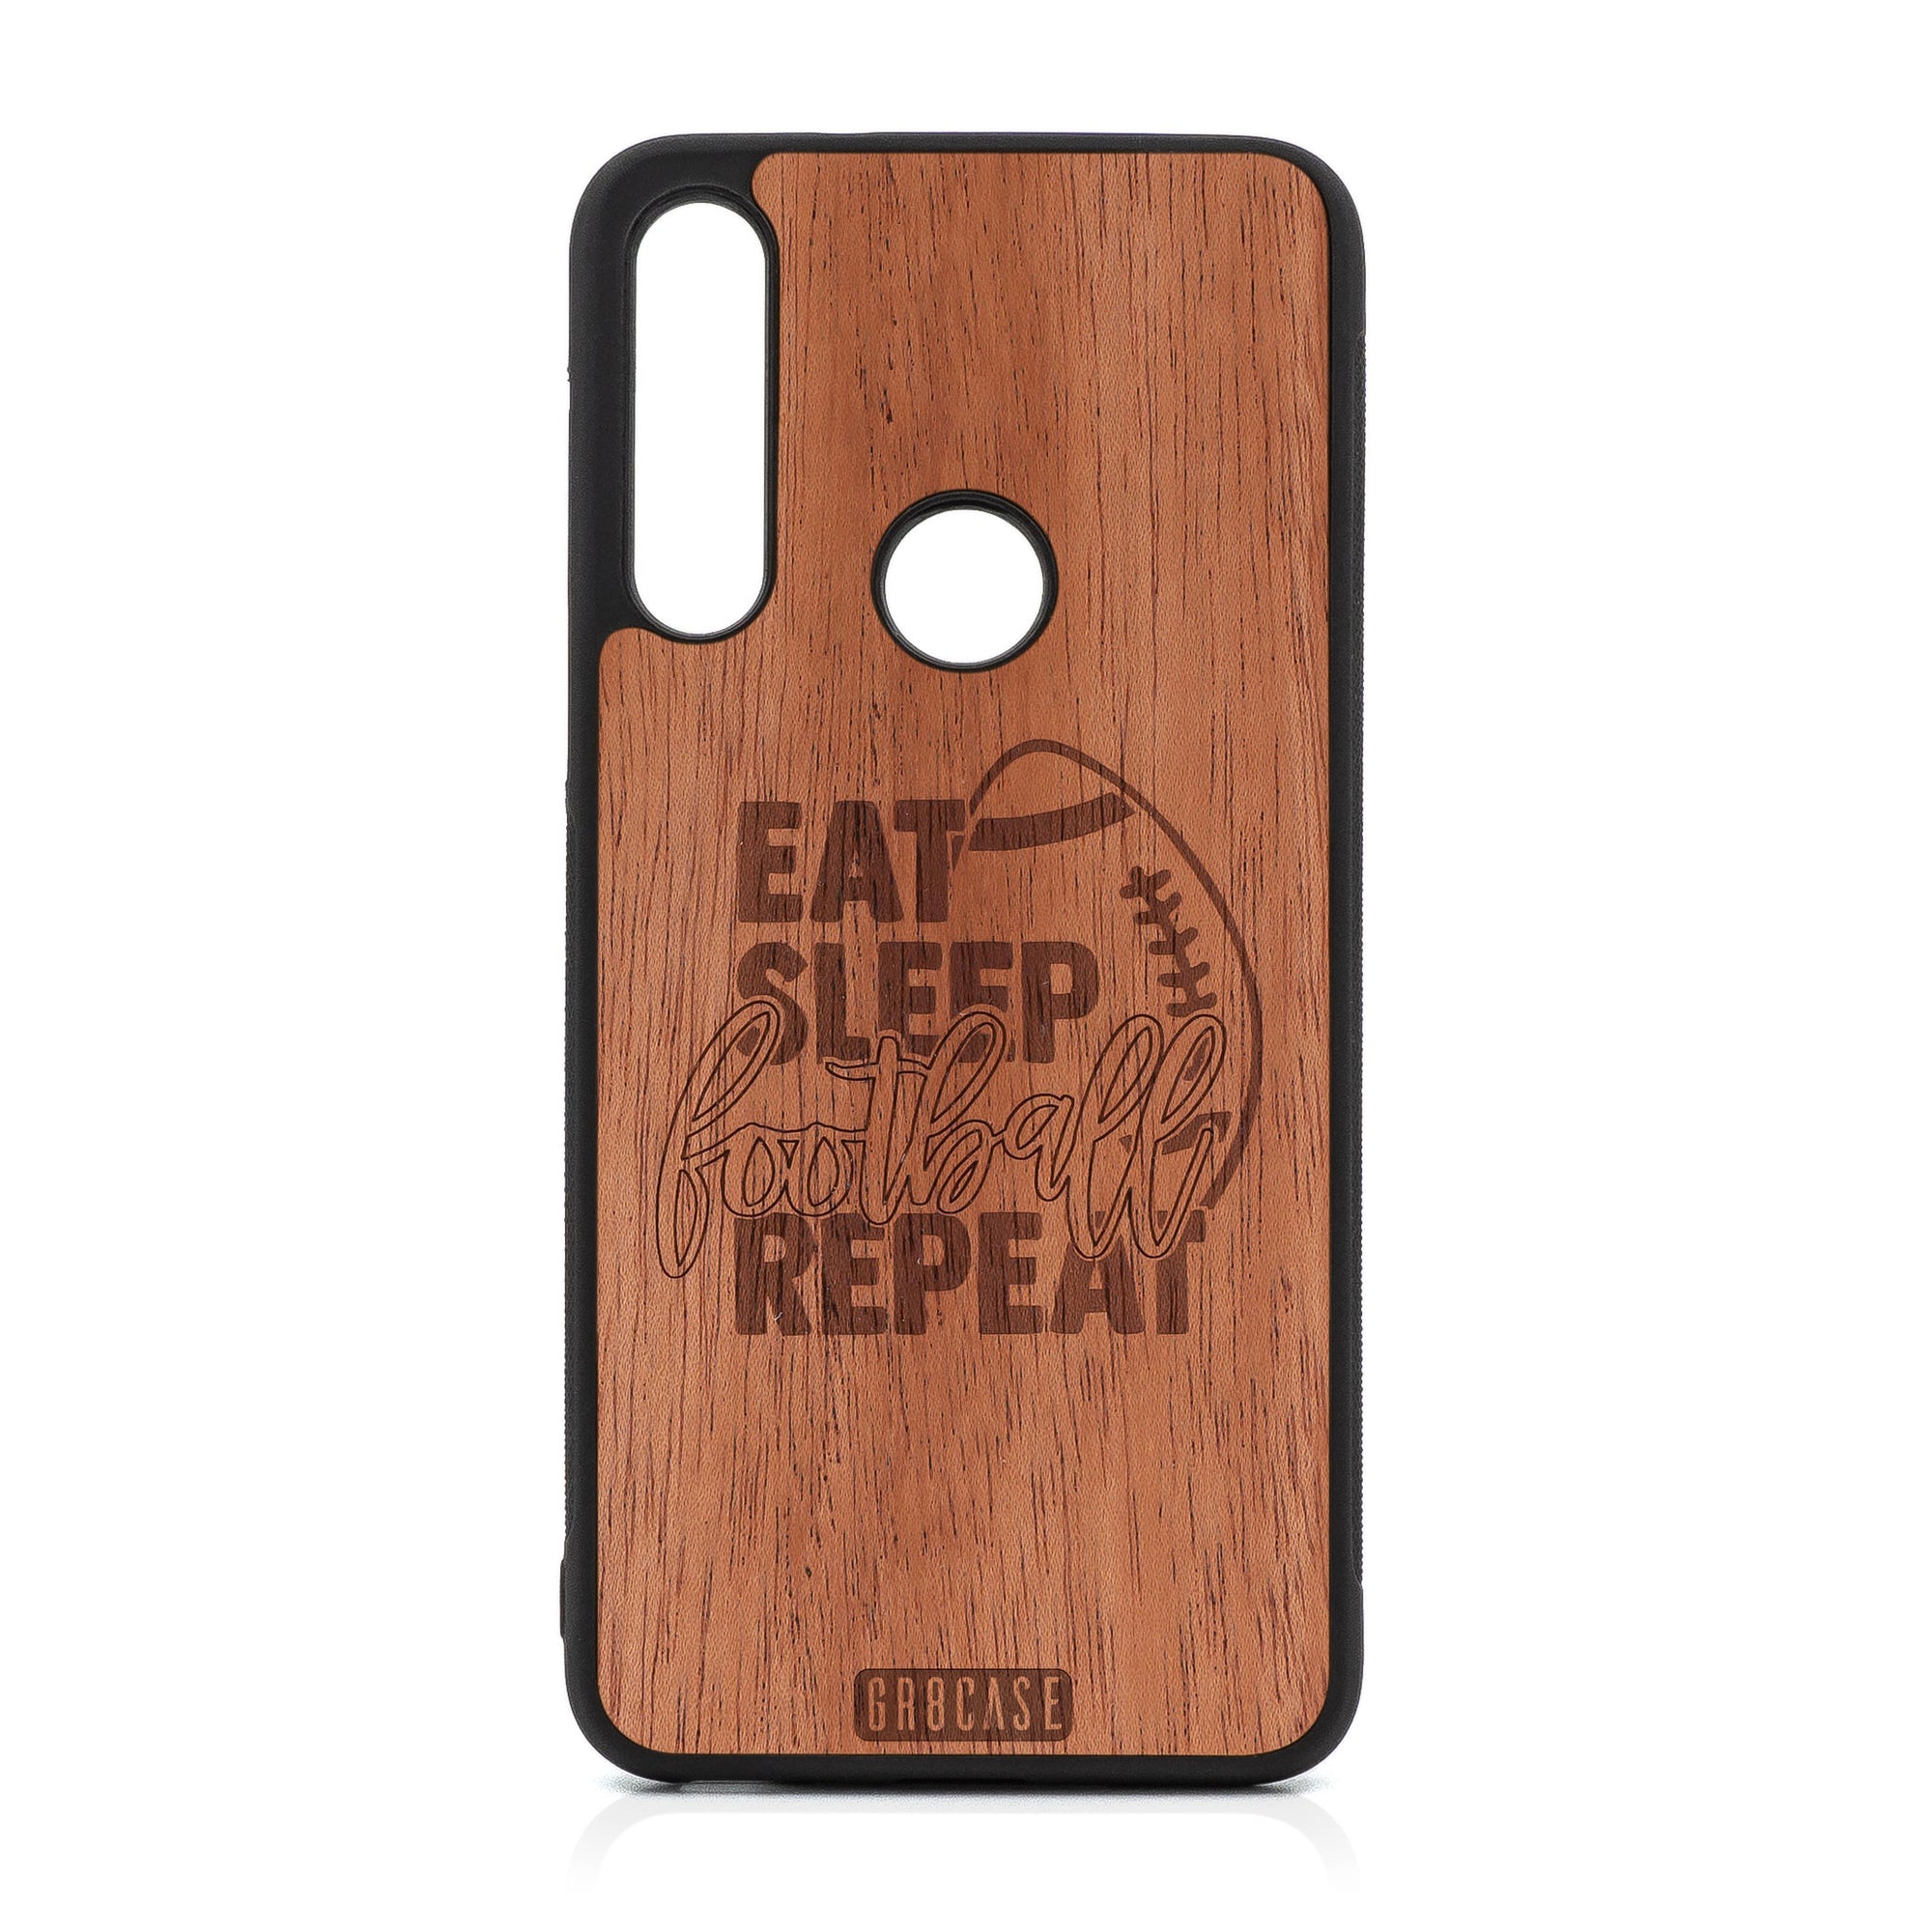 Eat Sleep Football Repeat Design Wood Case For Moto G Fast